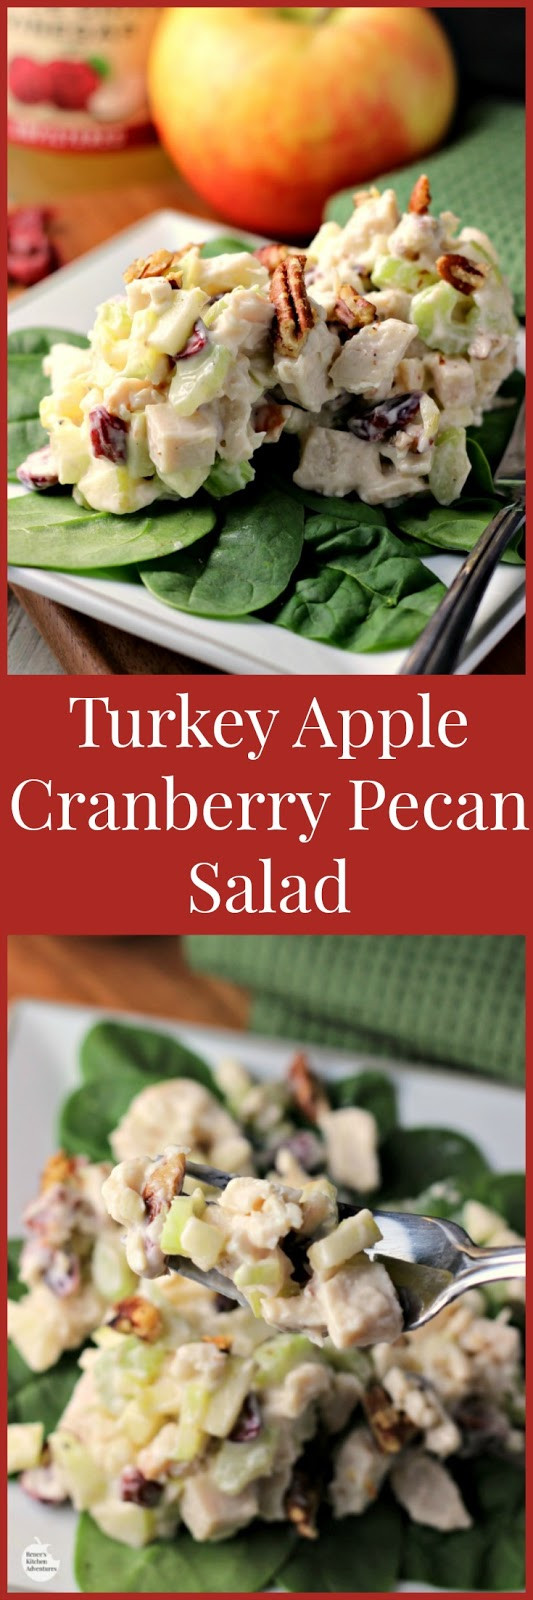 Cranberry Salad Recipes For Thanksgiving
 Turkey Apple Cranberry Pecan Salad